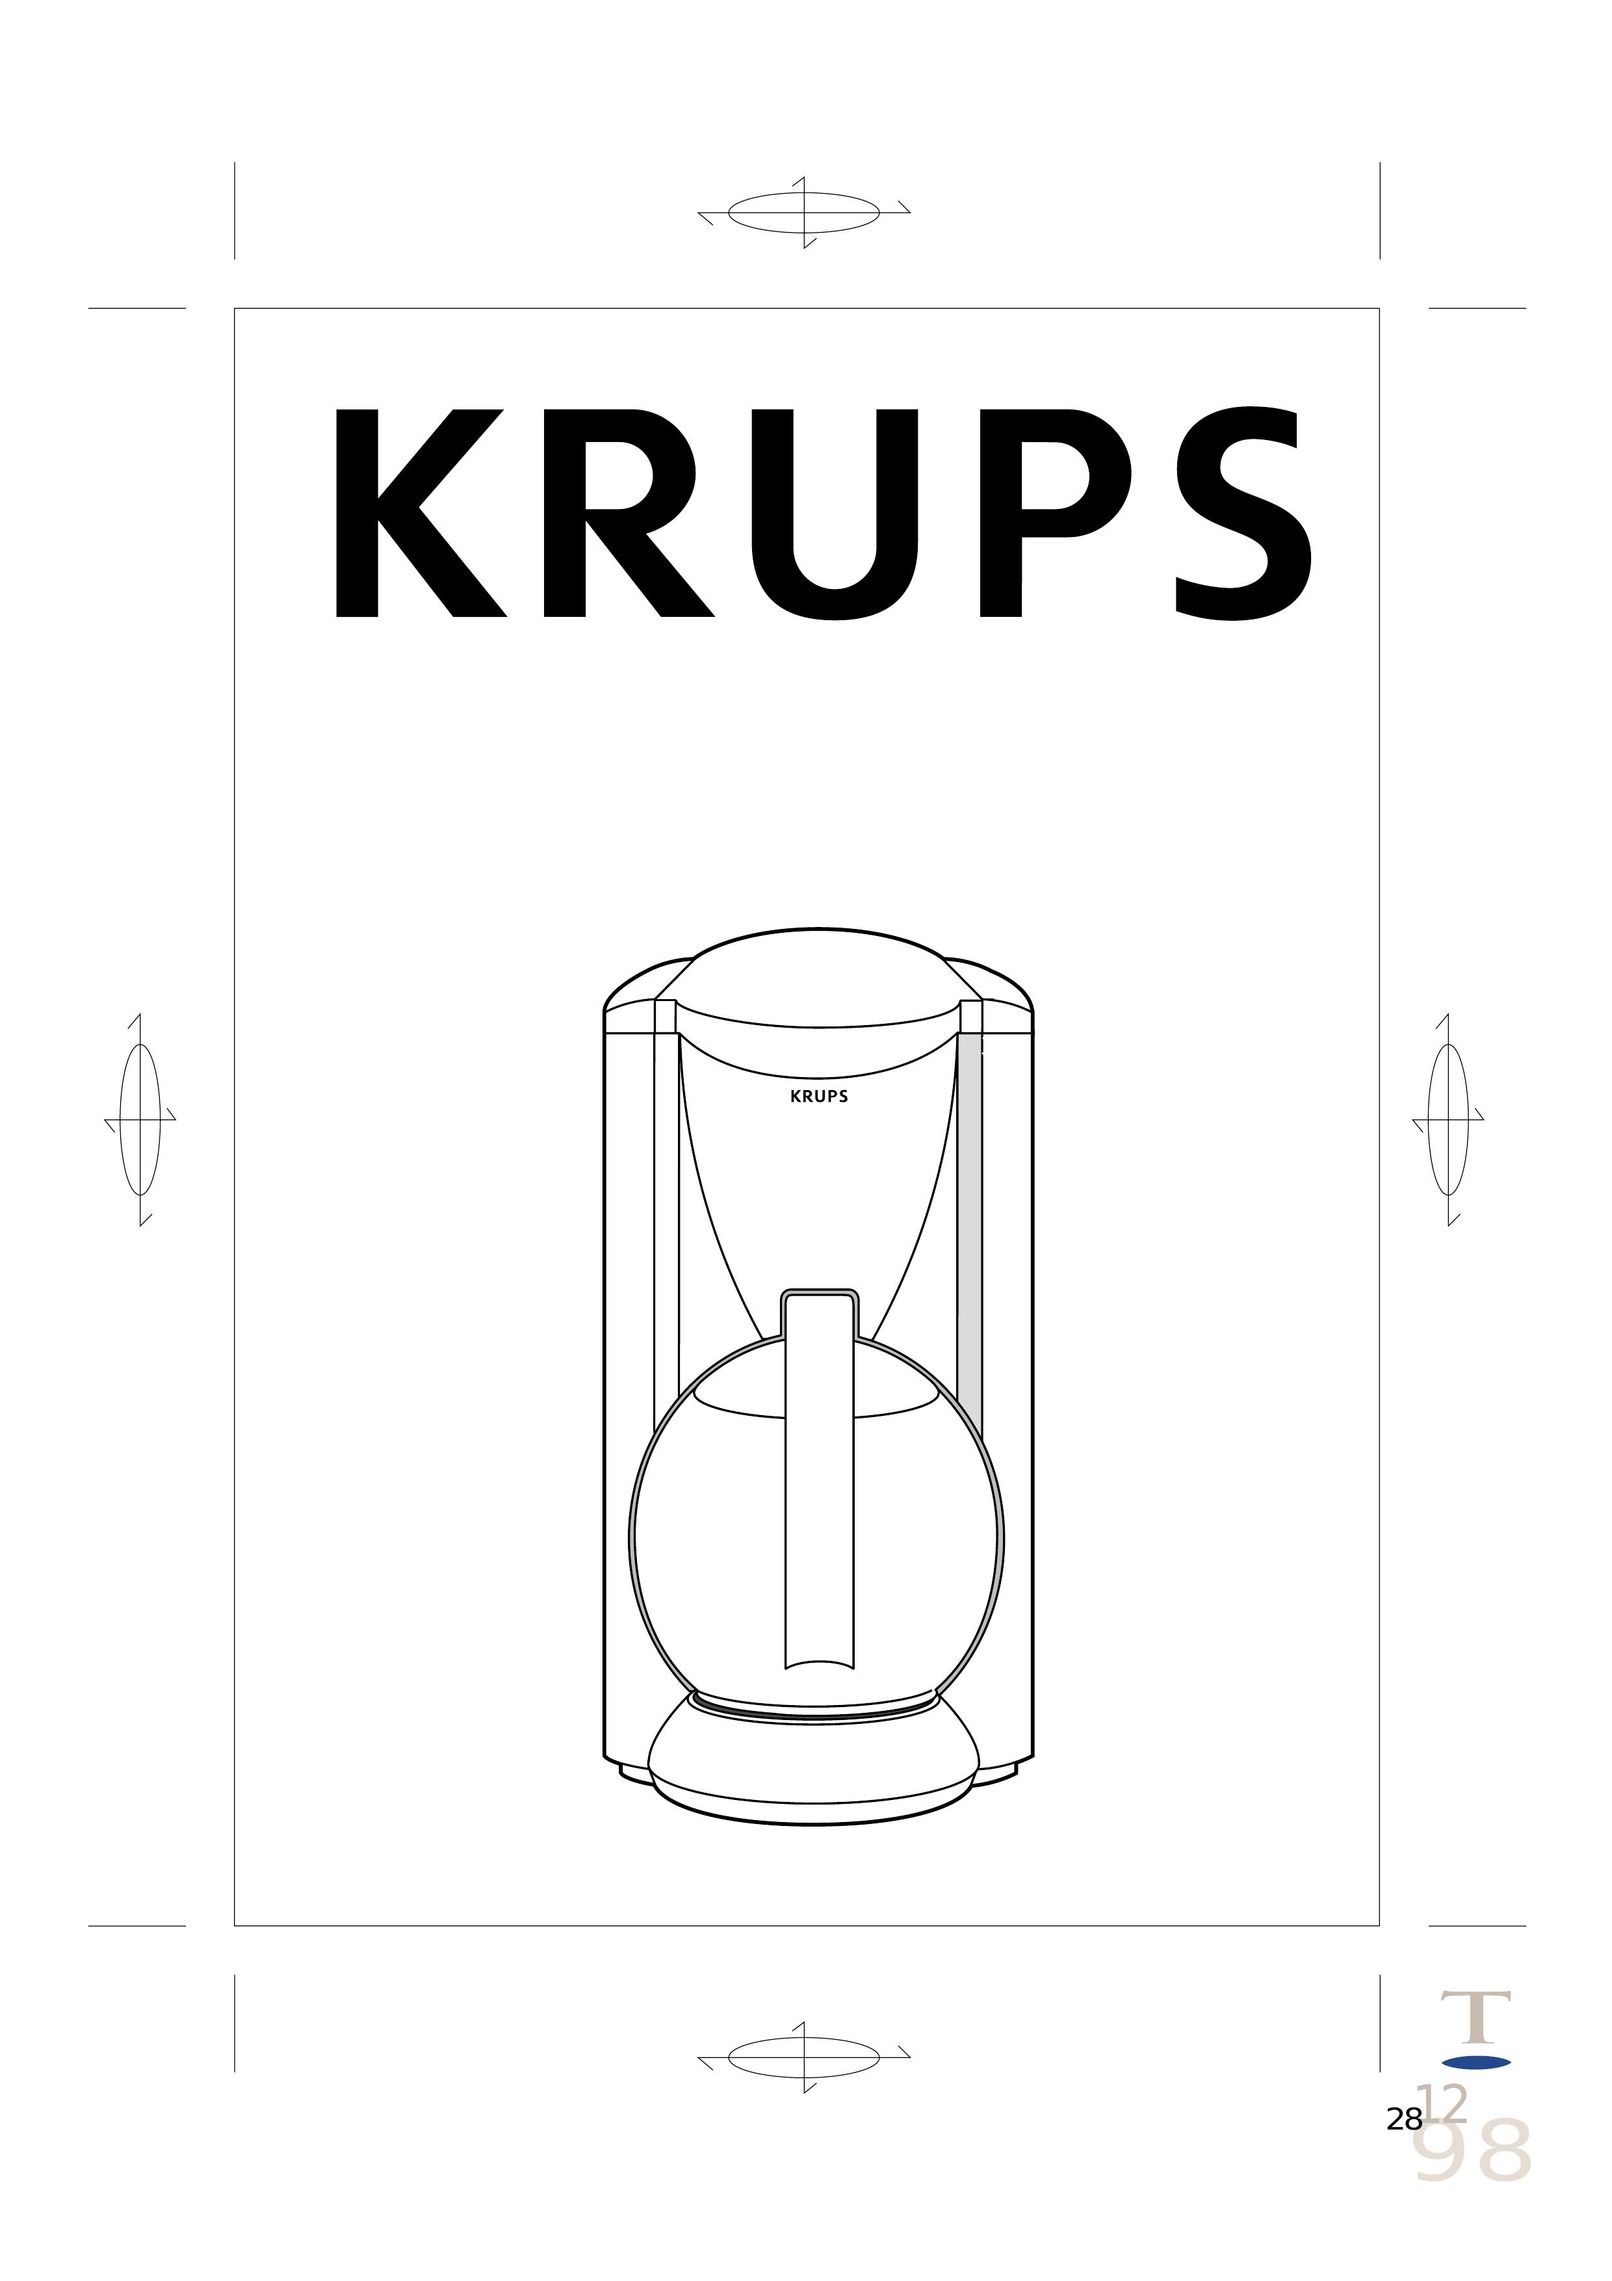 Krups 466 Coffeemaker User Manual